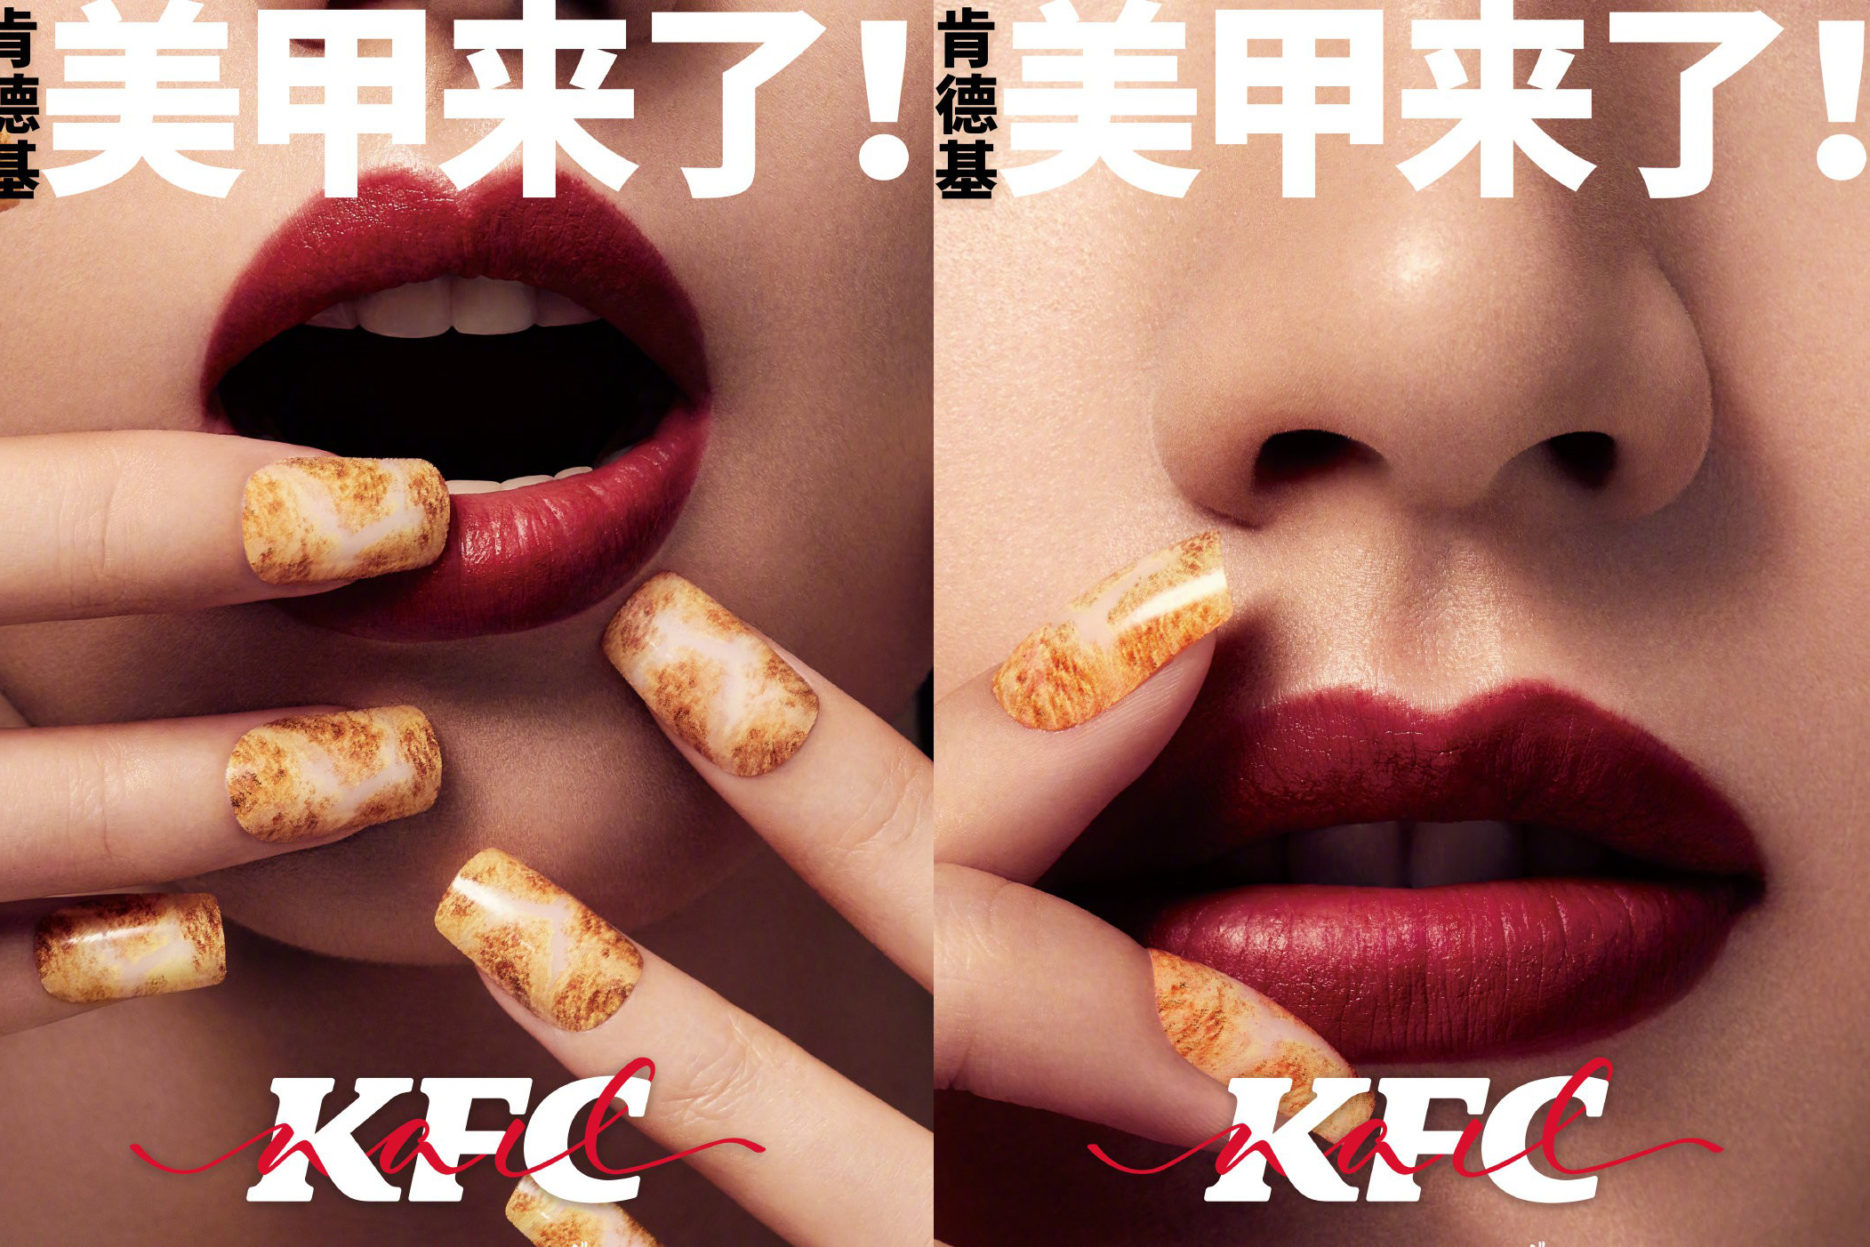 Credit: KFC China